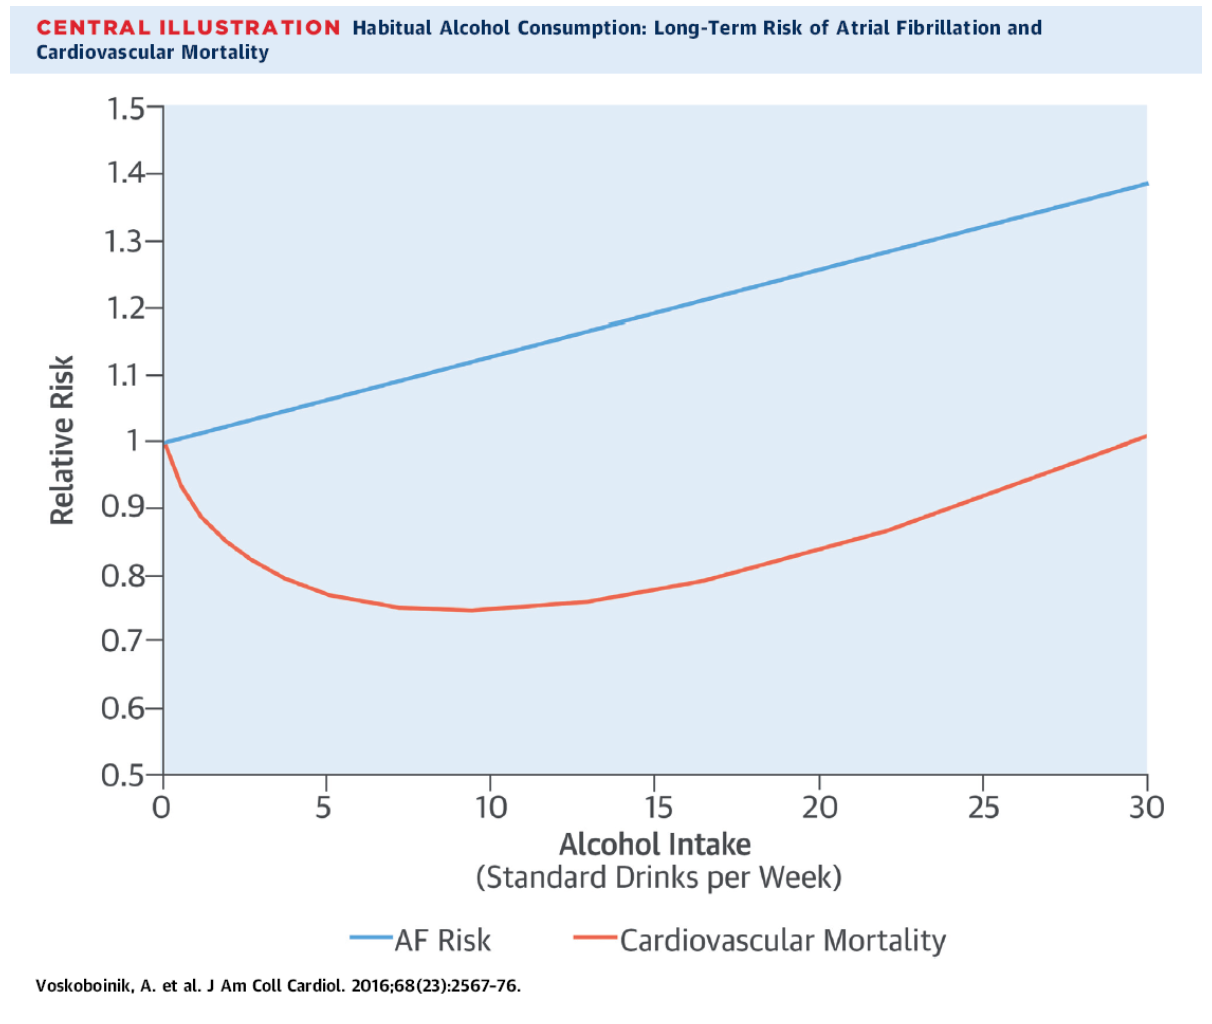 Habitual Alcohol Consumption: Long-term risk of atrial fibrillation and cardiovascular mortality